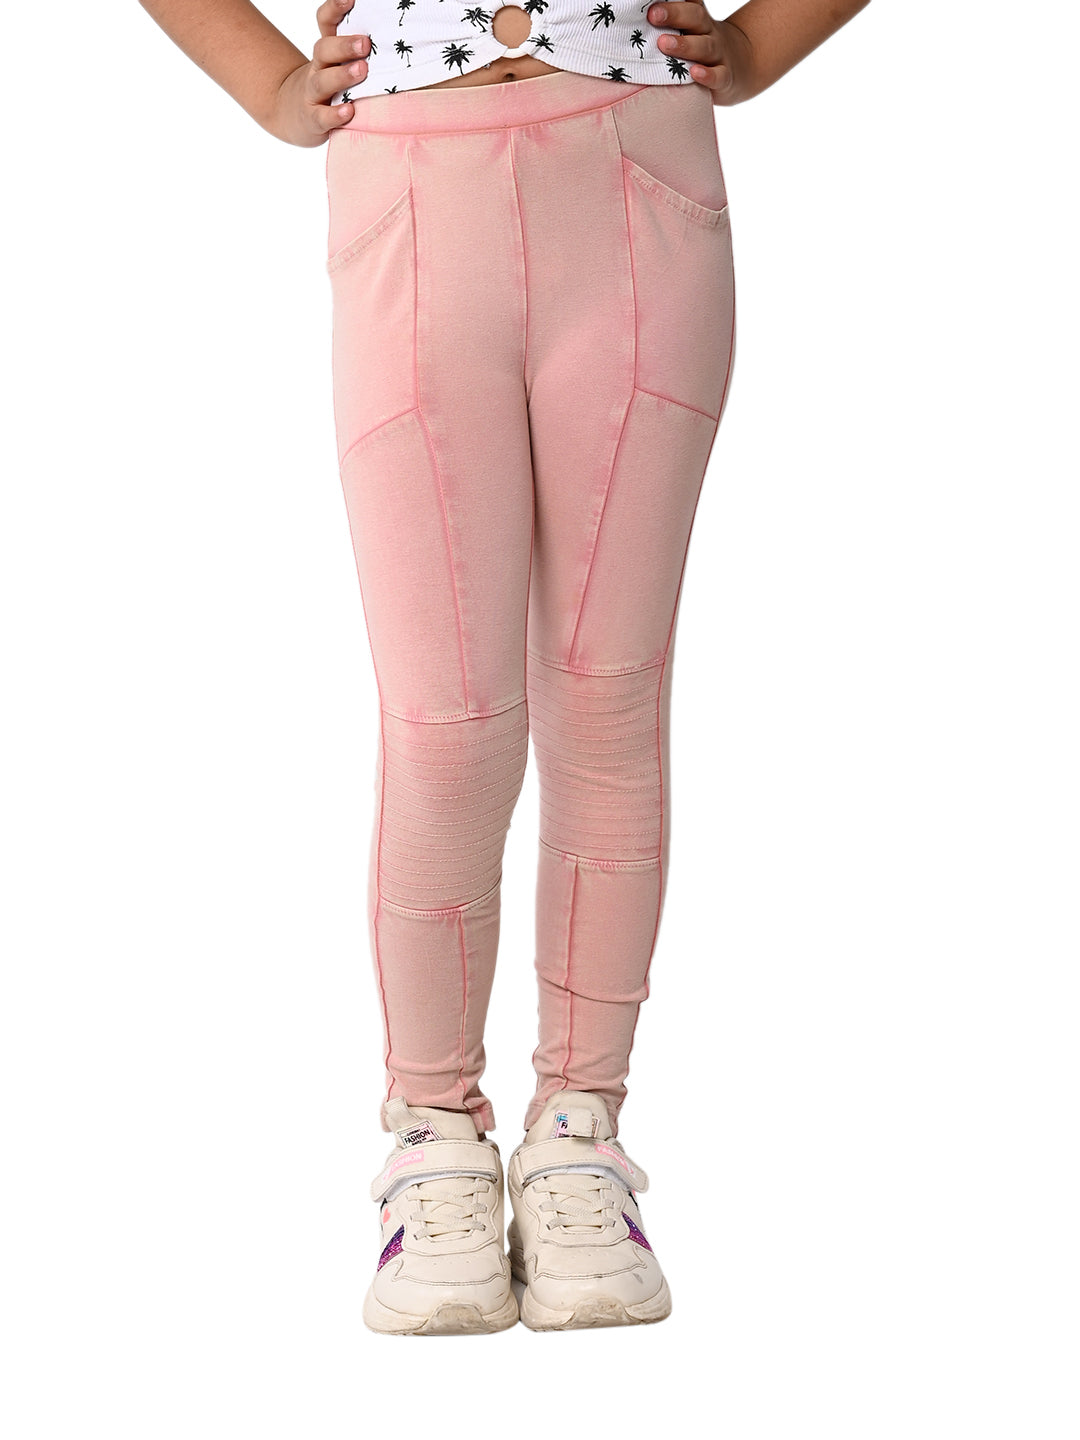 Kid Girl Pink Denim Legging